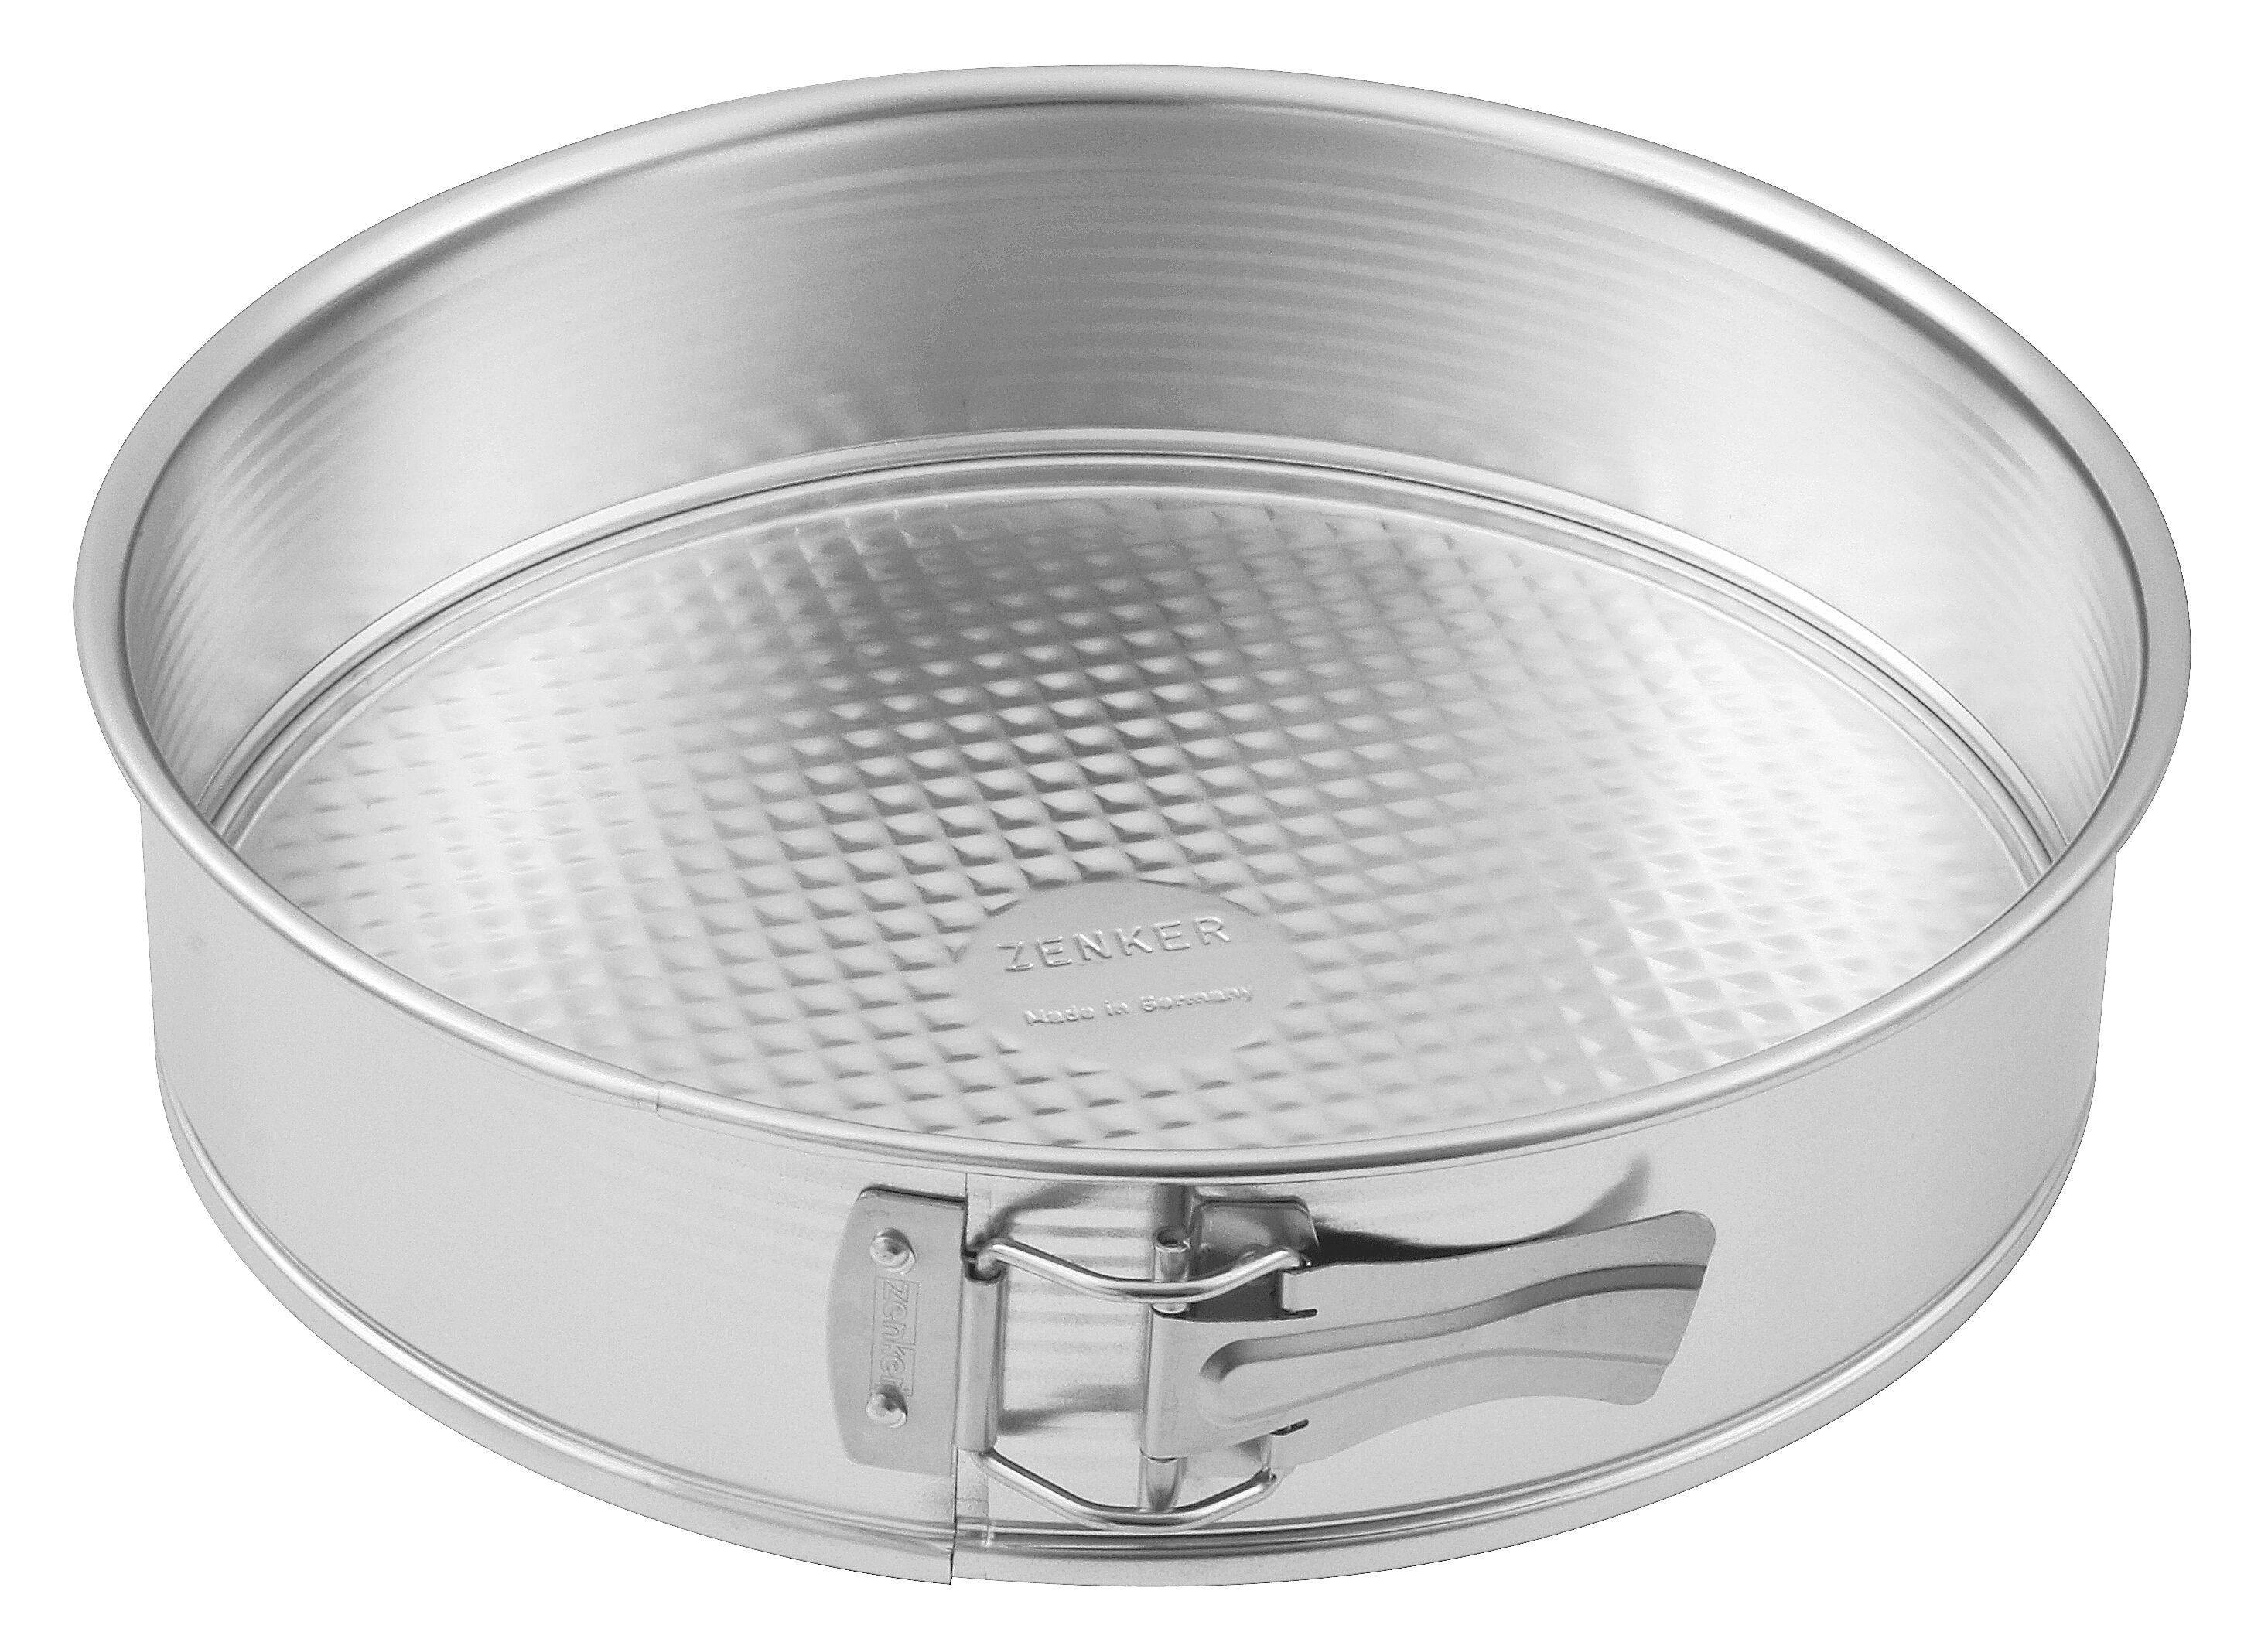 Nordic Ware Formed Aluminum Classic Bundt Pan, 12.5 cup, 10 